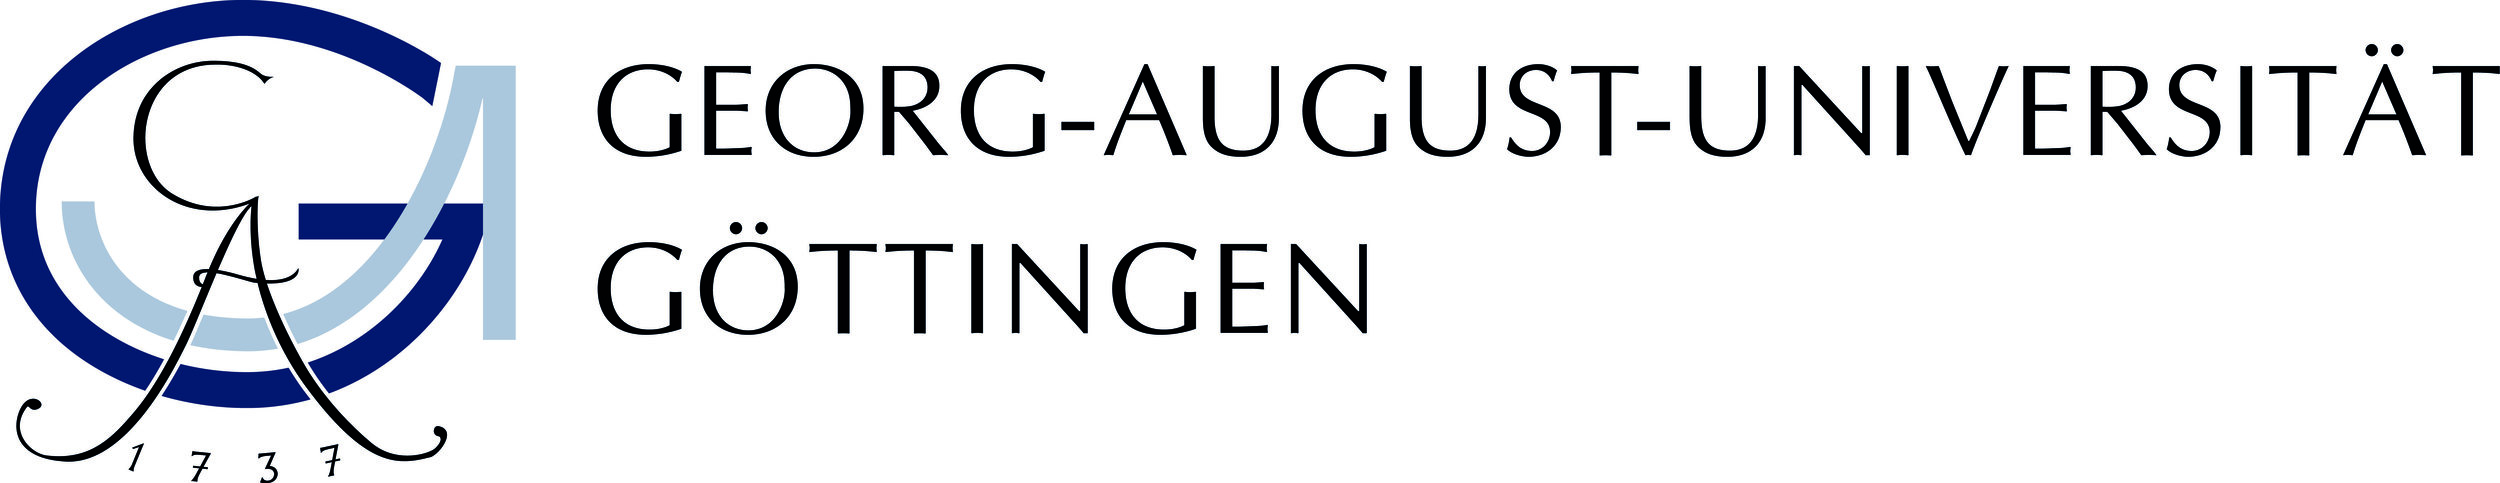 Uni哥廷根- Logo 4c CMYK - 600dpi.jpg